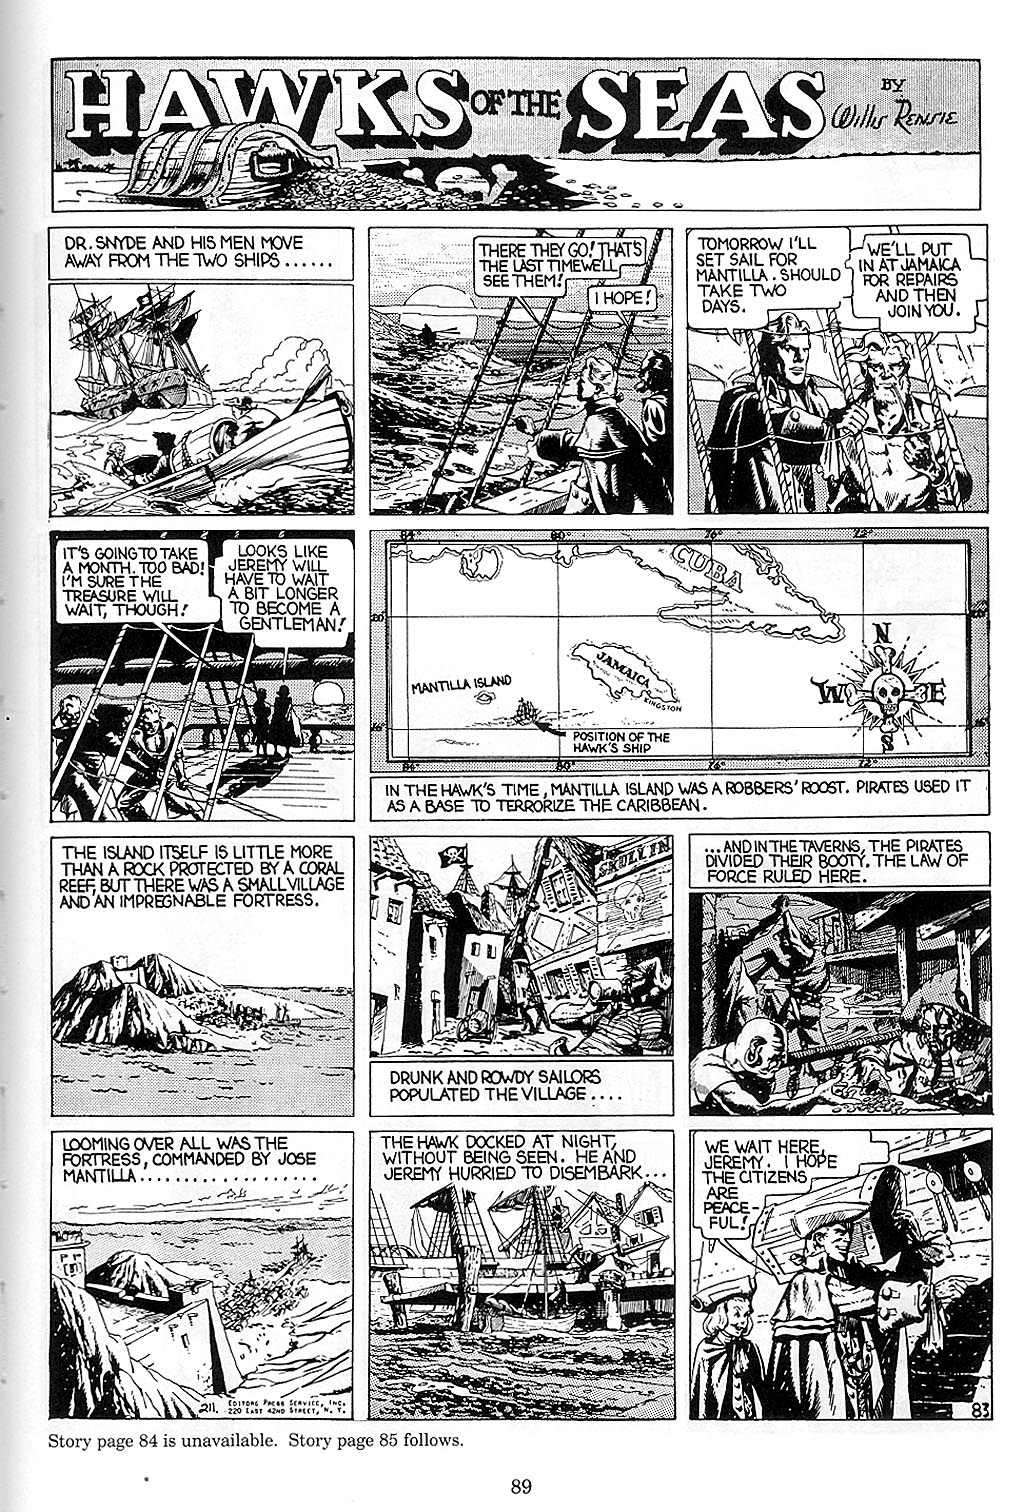 Read online Will Eisner's Hawks of the Seas comic -  Issue # TPB - 90